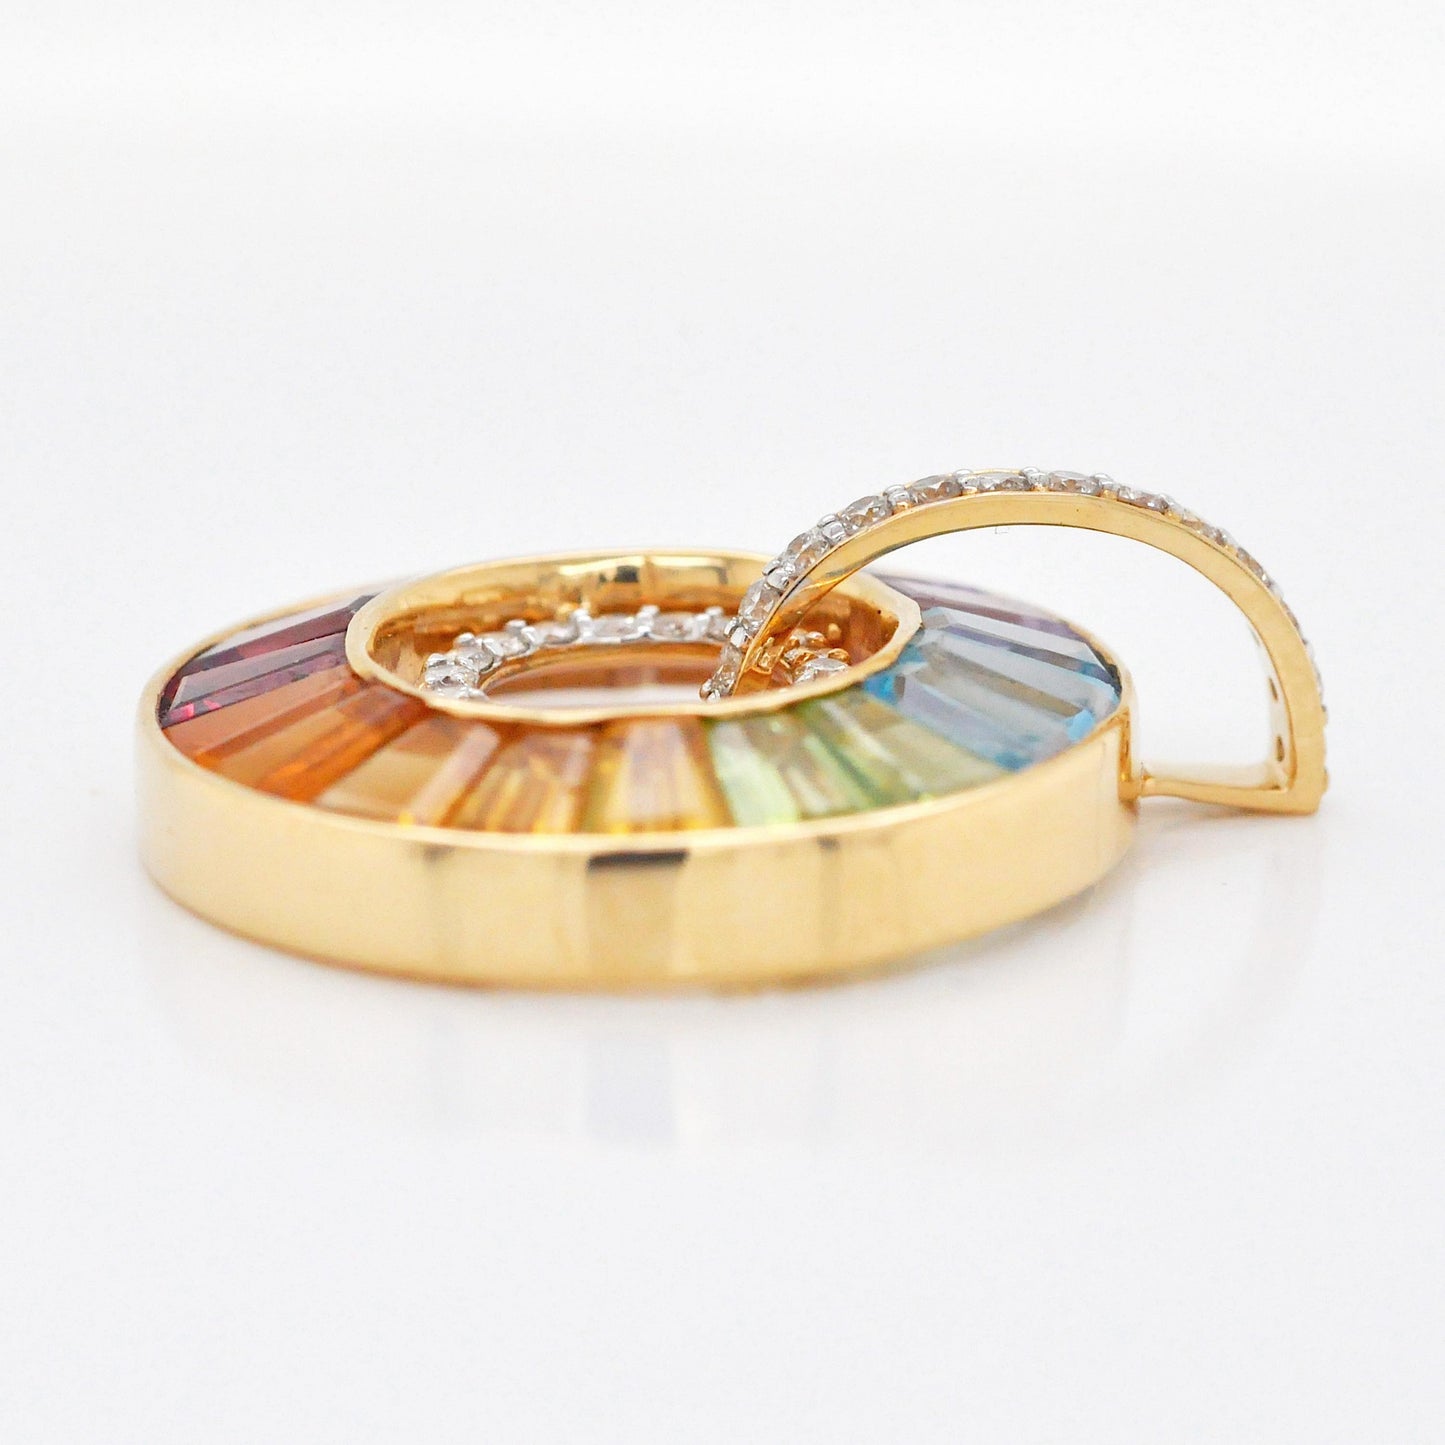 18k Gold Rainbow Gemstones Diamond Circle Pendant